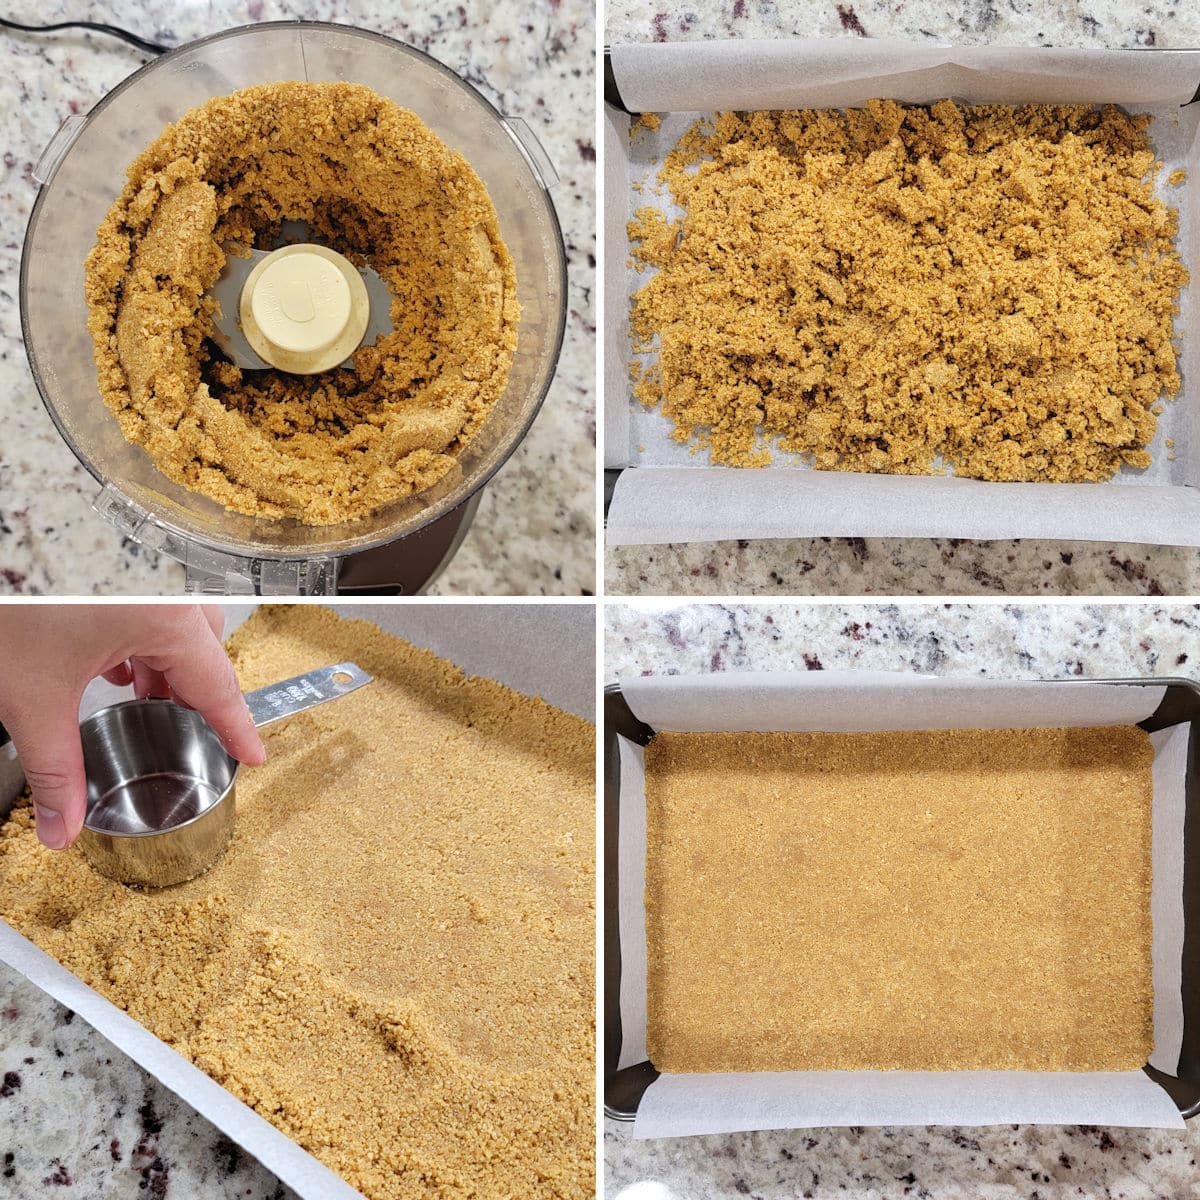 Pressing a graham cracker crust into a 9x13 pan.